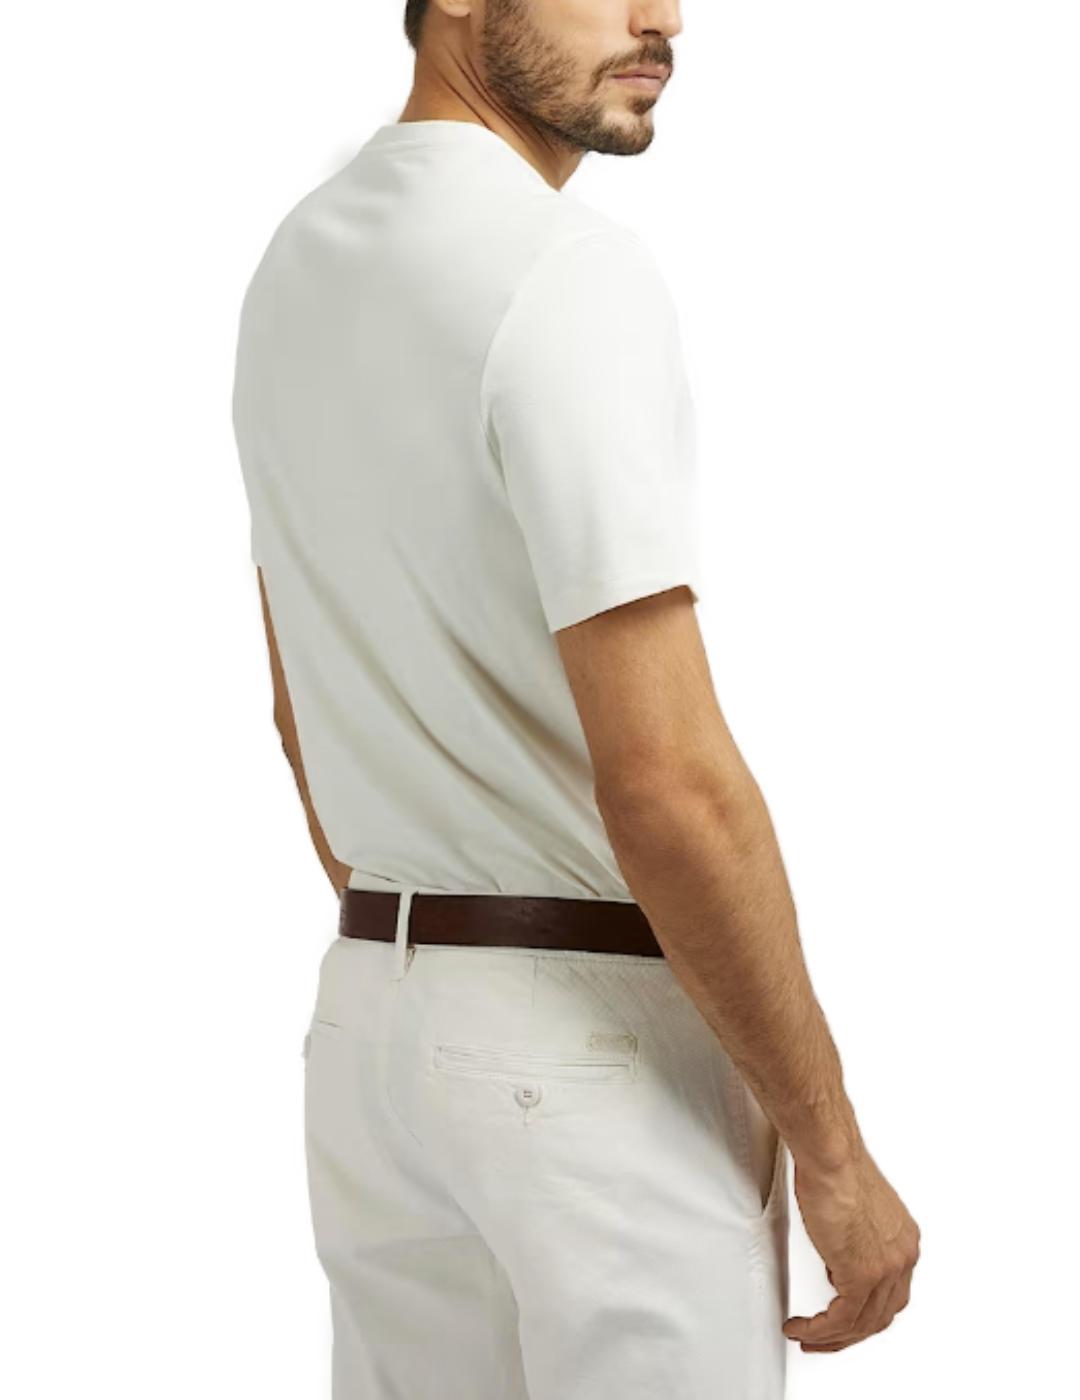 Camiseta Guess Didim blanca de manga corta para hombre